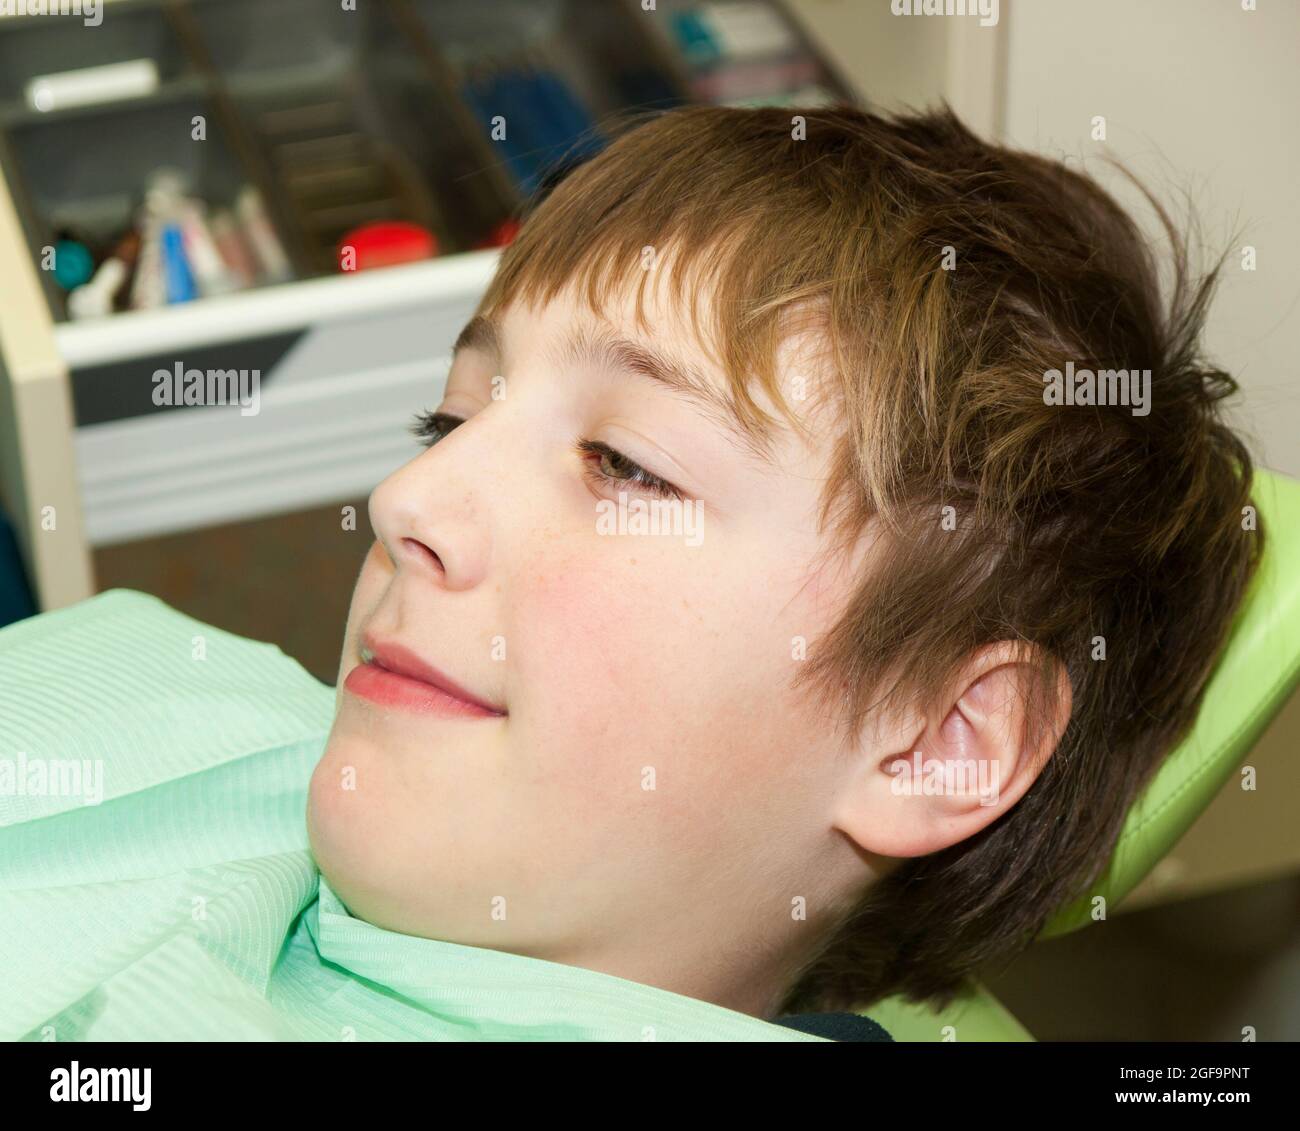 Boy waiting for dental examination Stock Photo